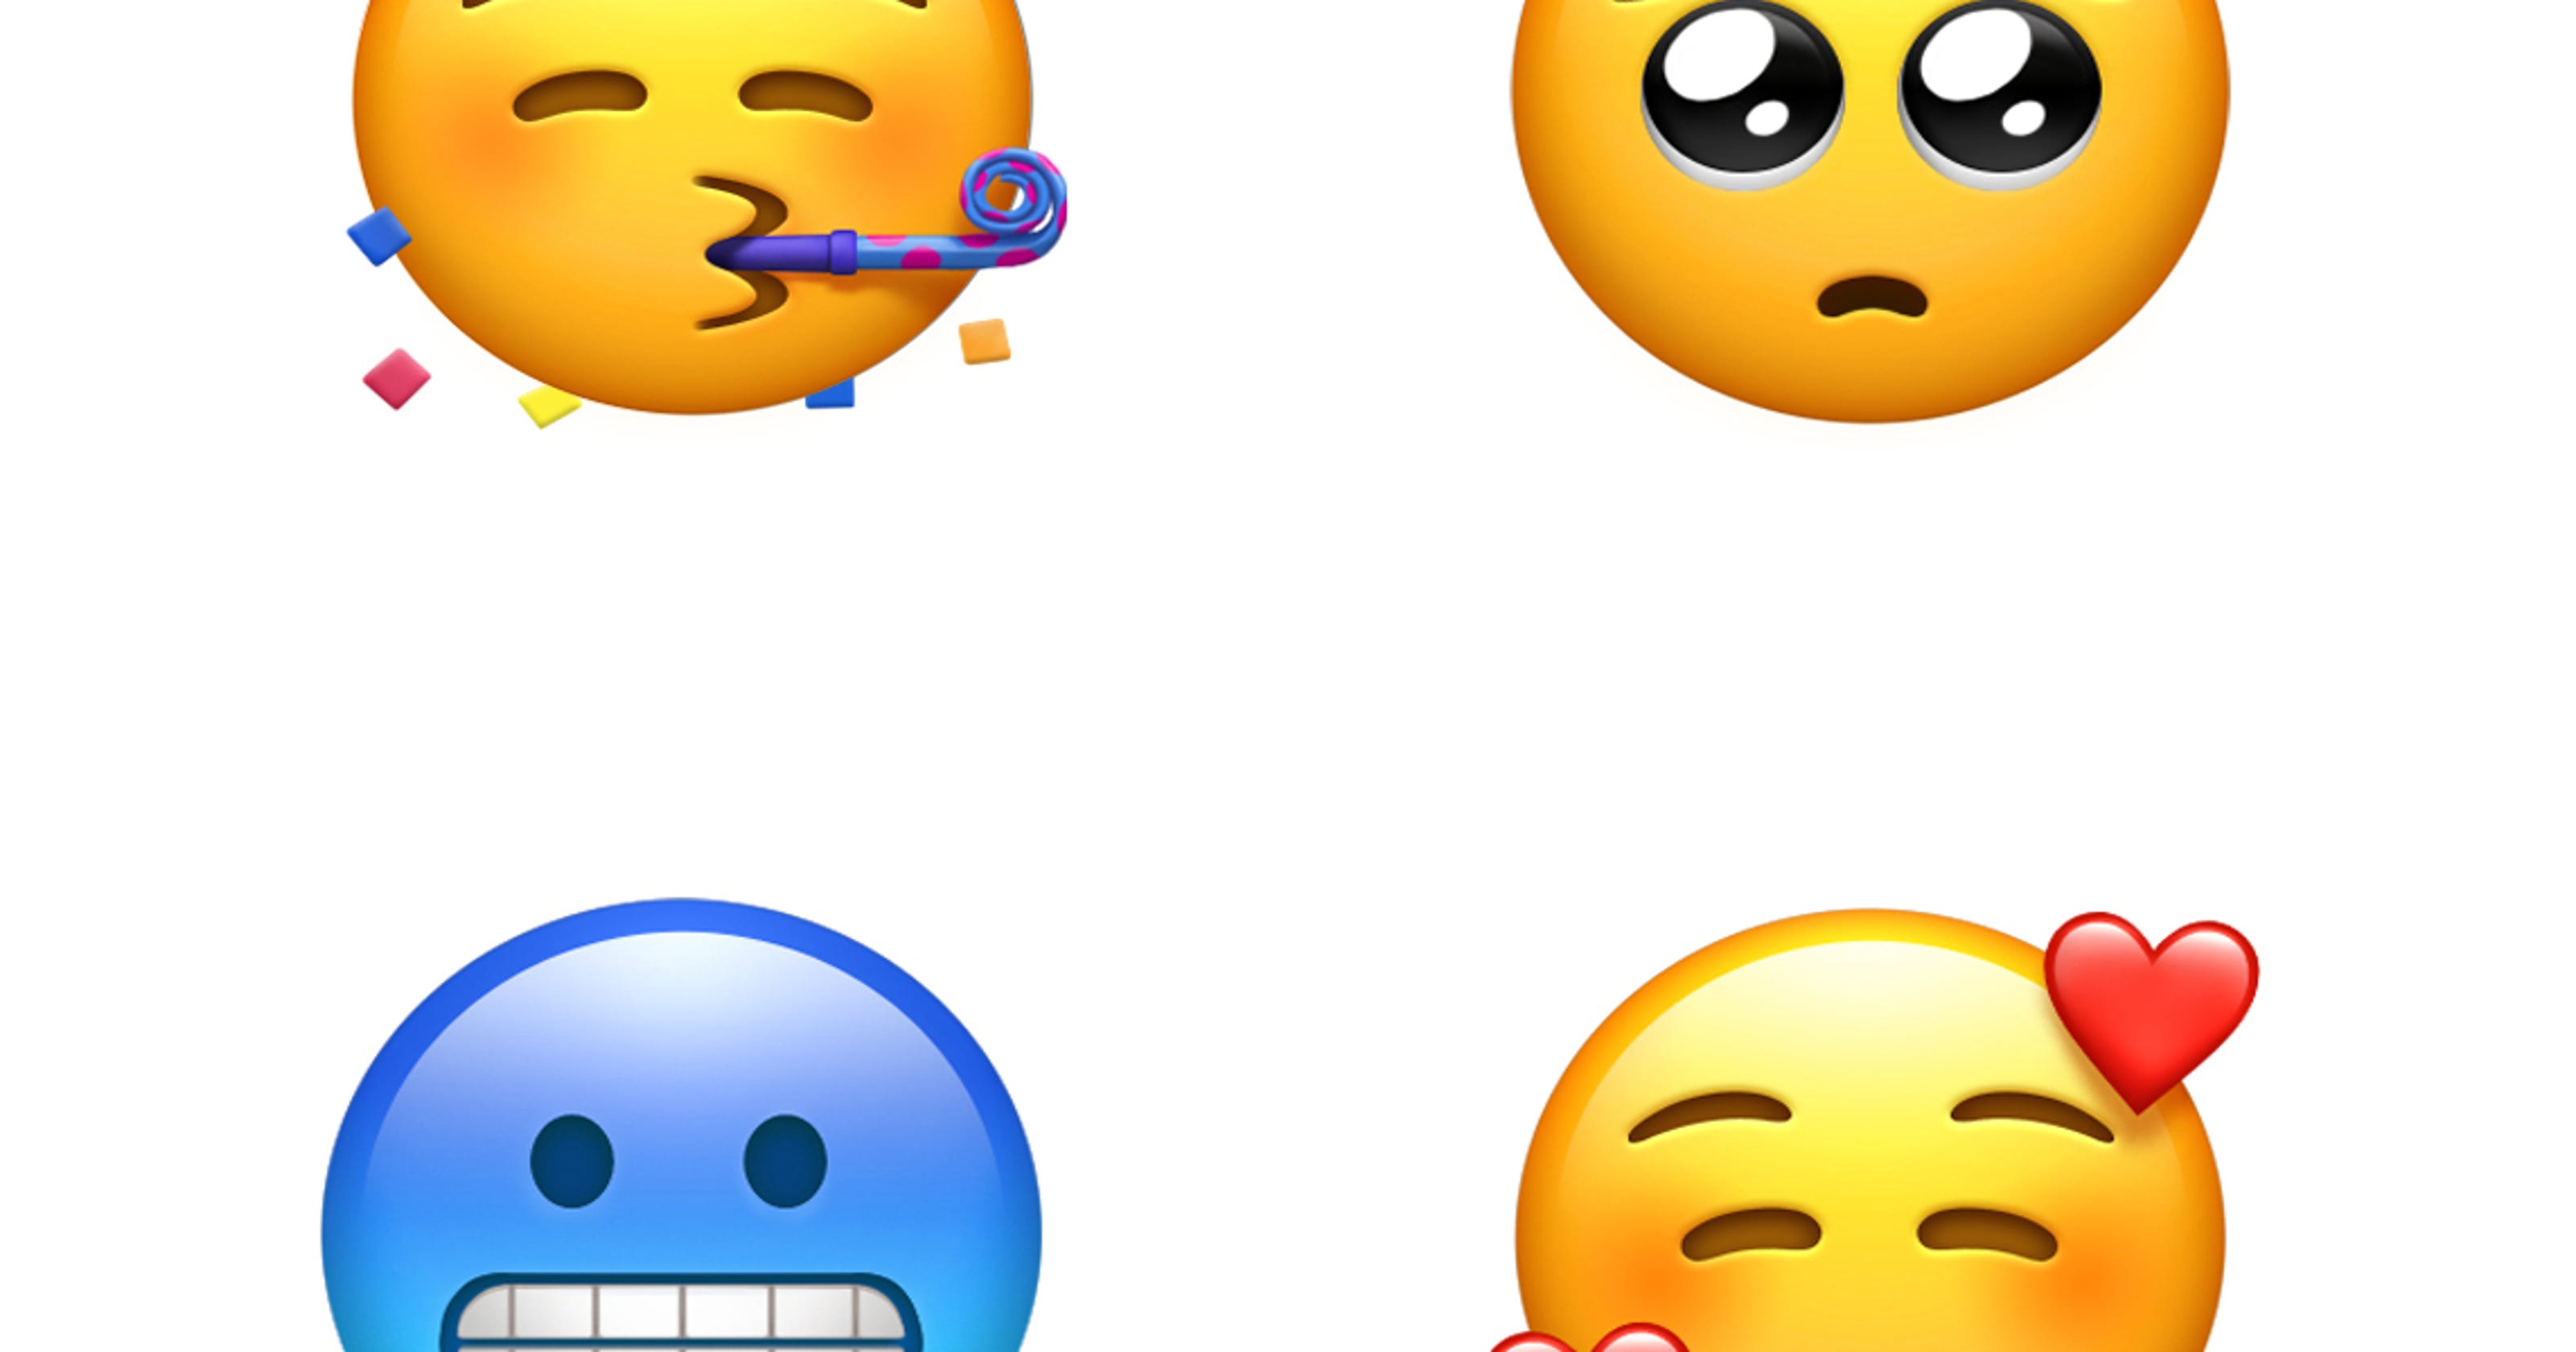 Apple unveils more than 70 new emojis ahead of World Emoji Day